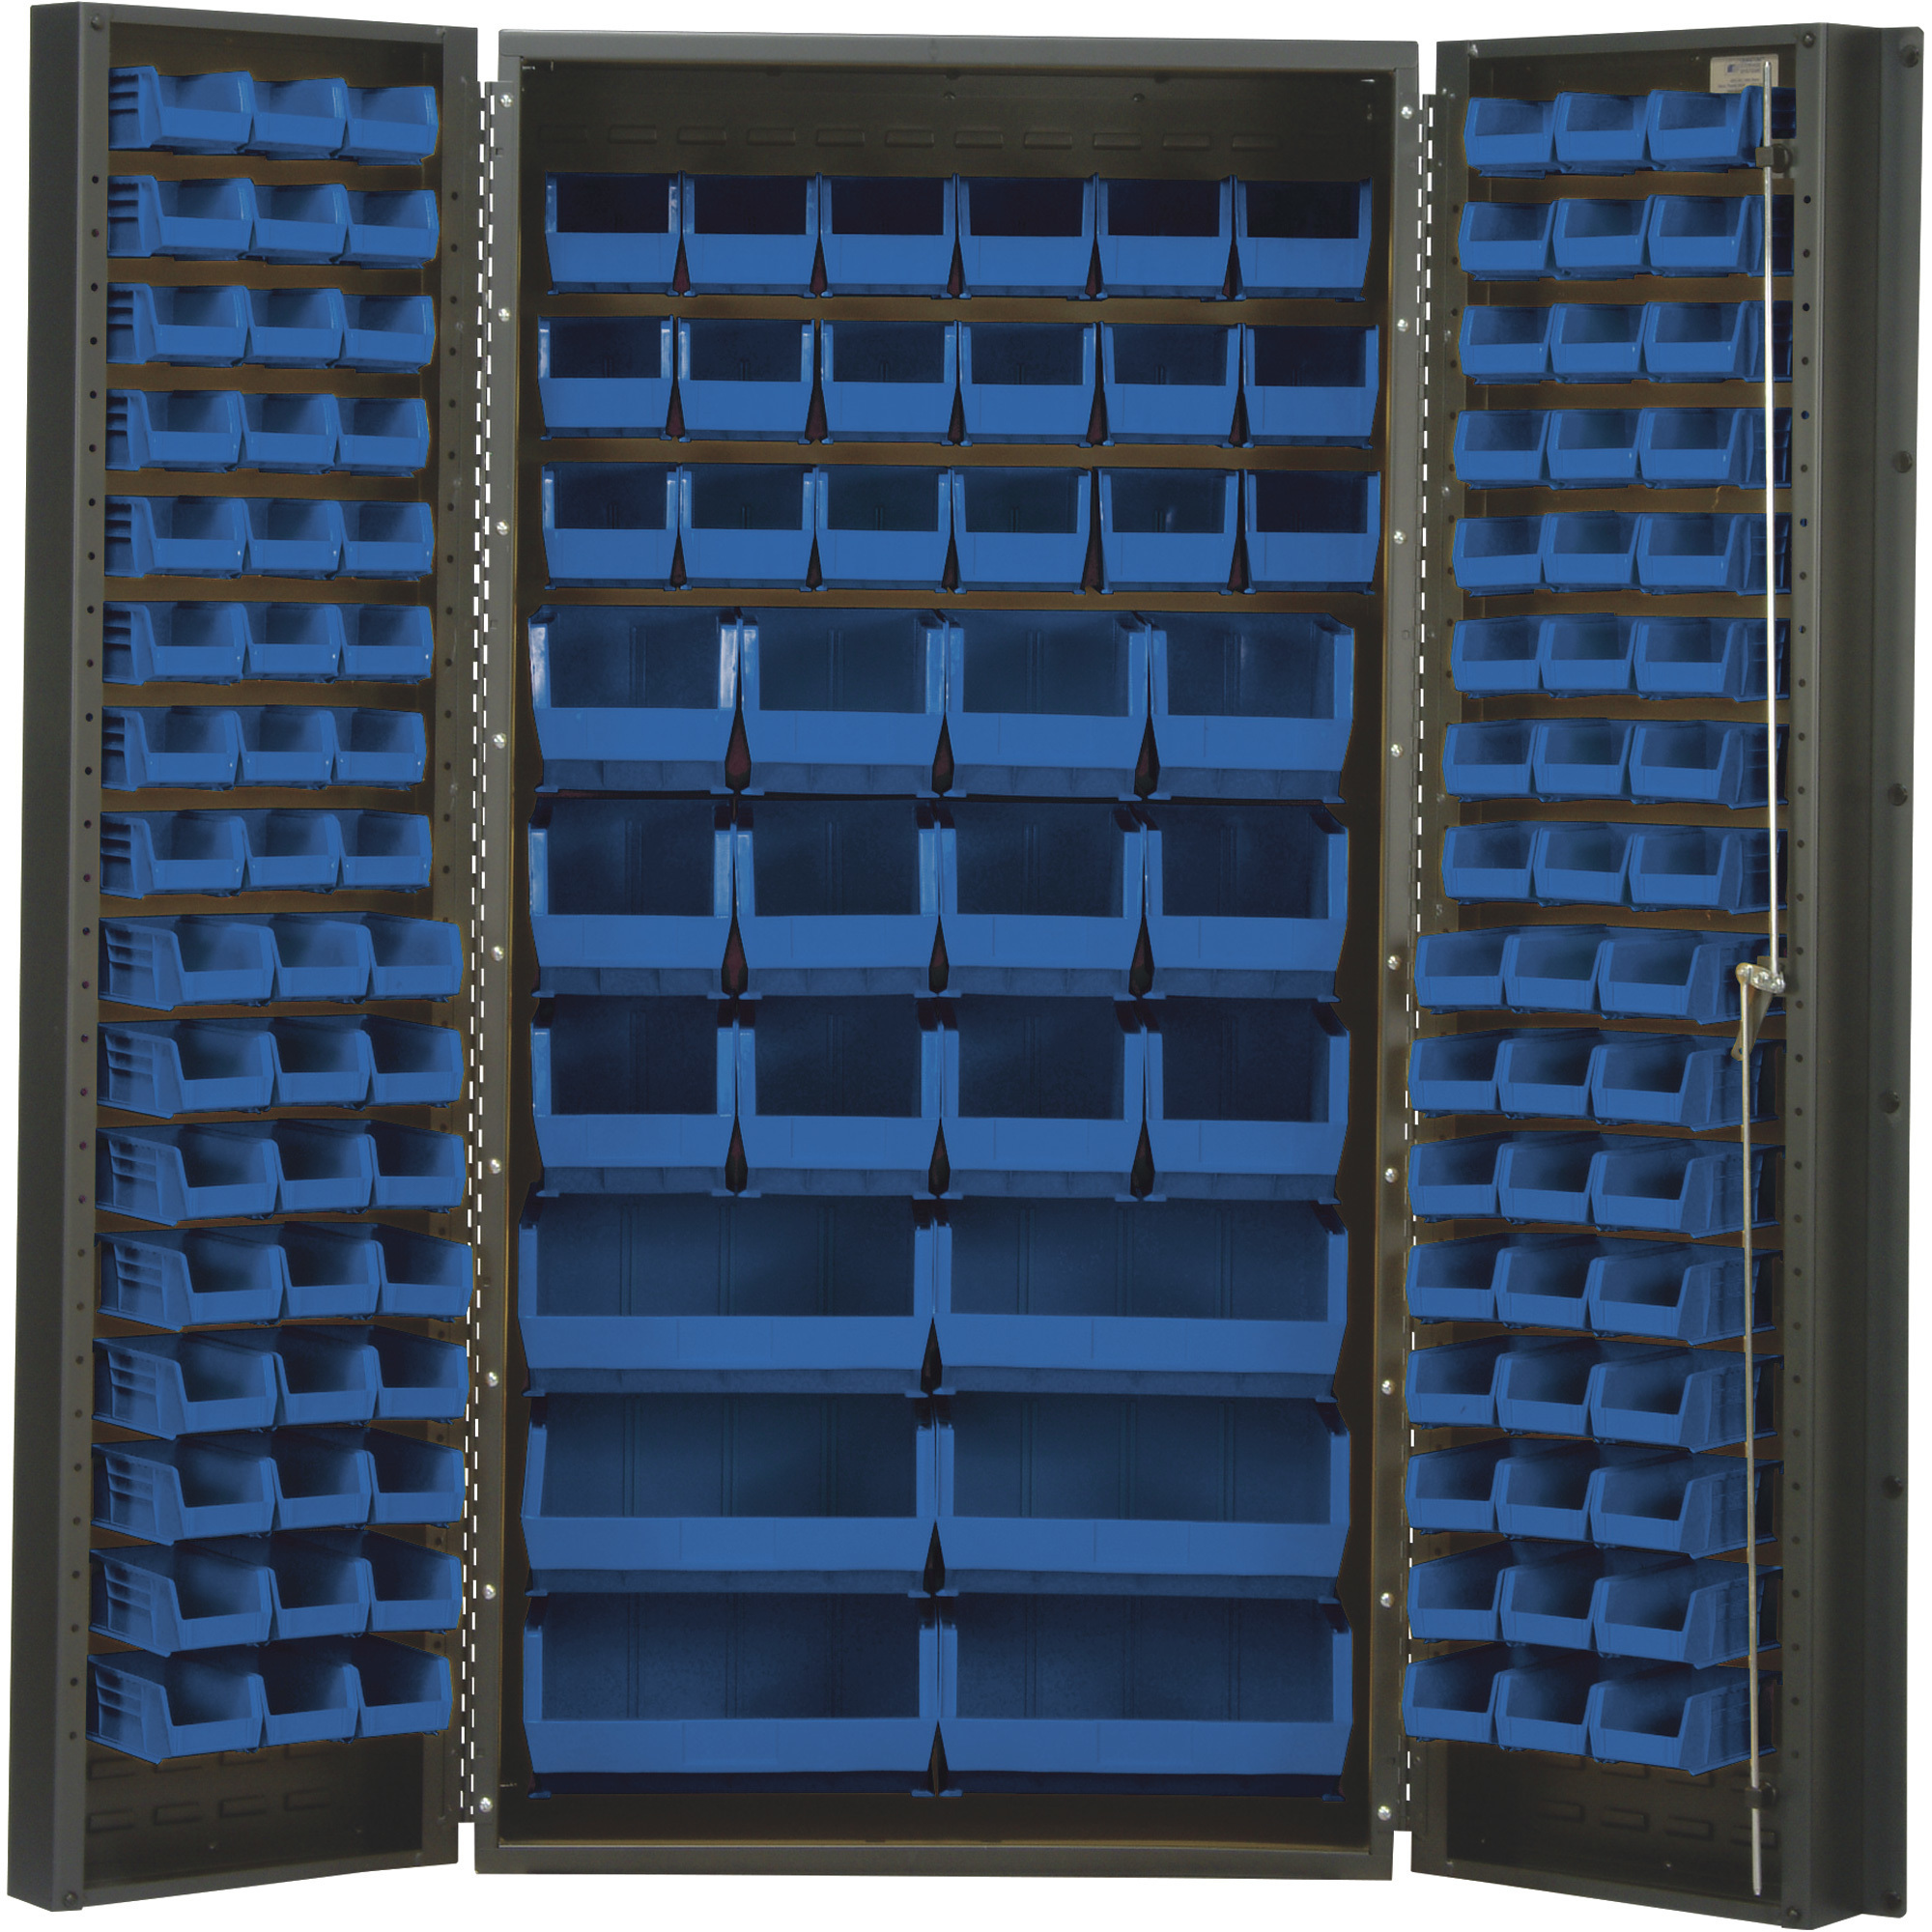 Quantum Storage Cabinet With 132 Bins, 36Inch x 24Inch x 72Inch Size, Blue